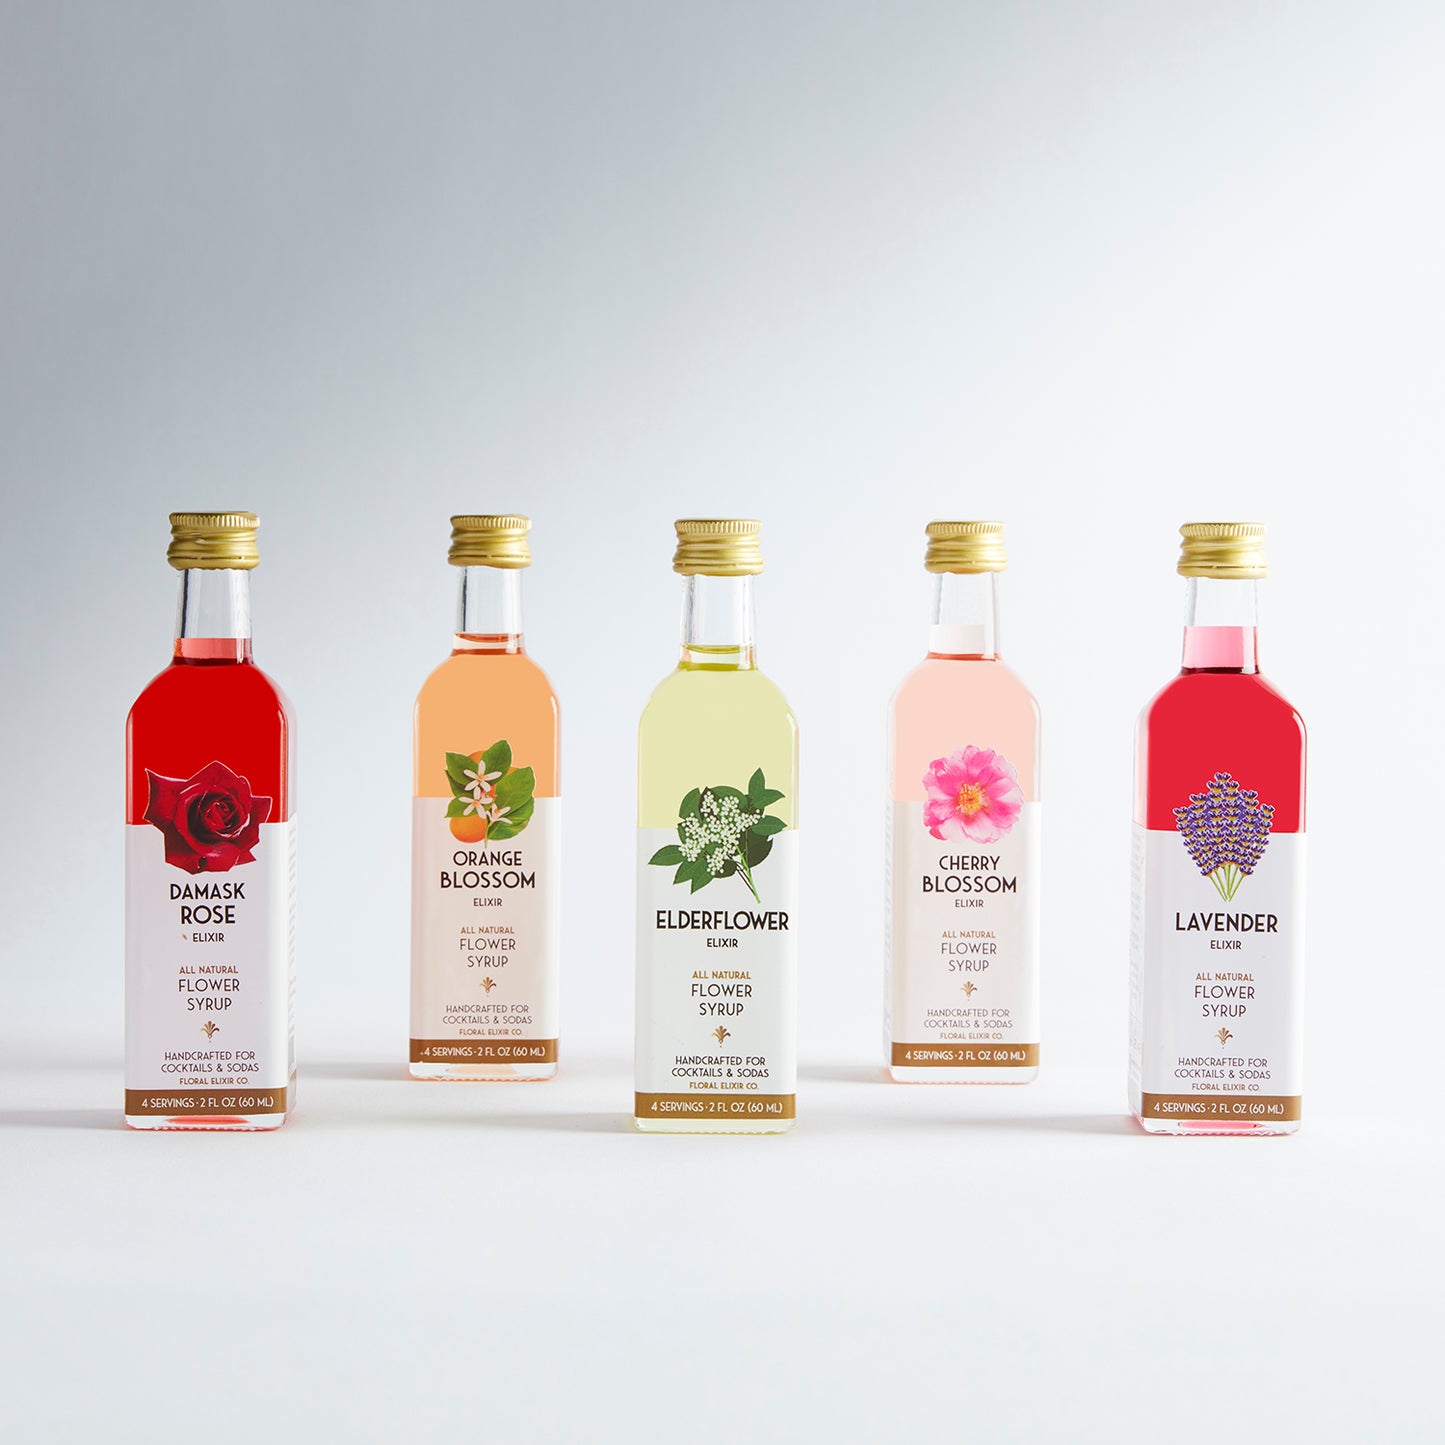 Floral Elixir Co. The Classics Cocktail Kit